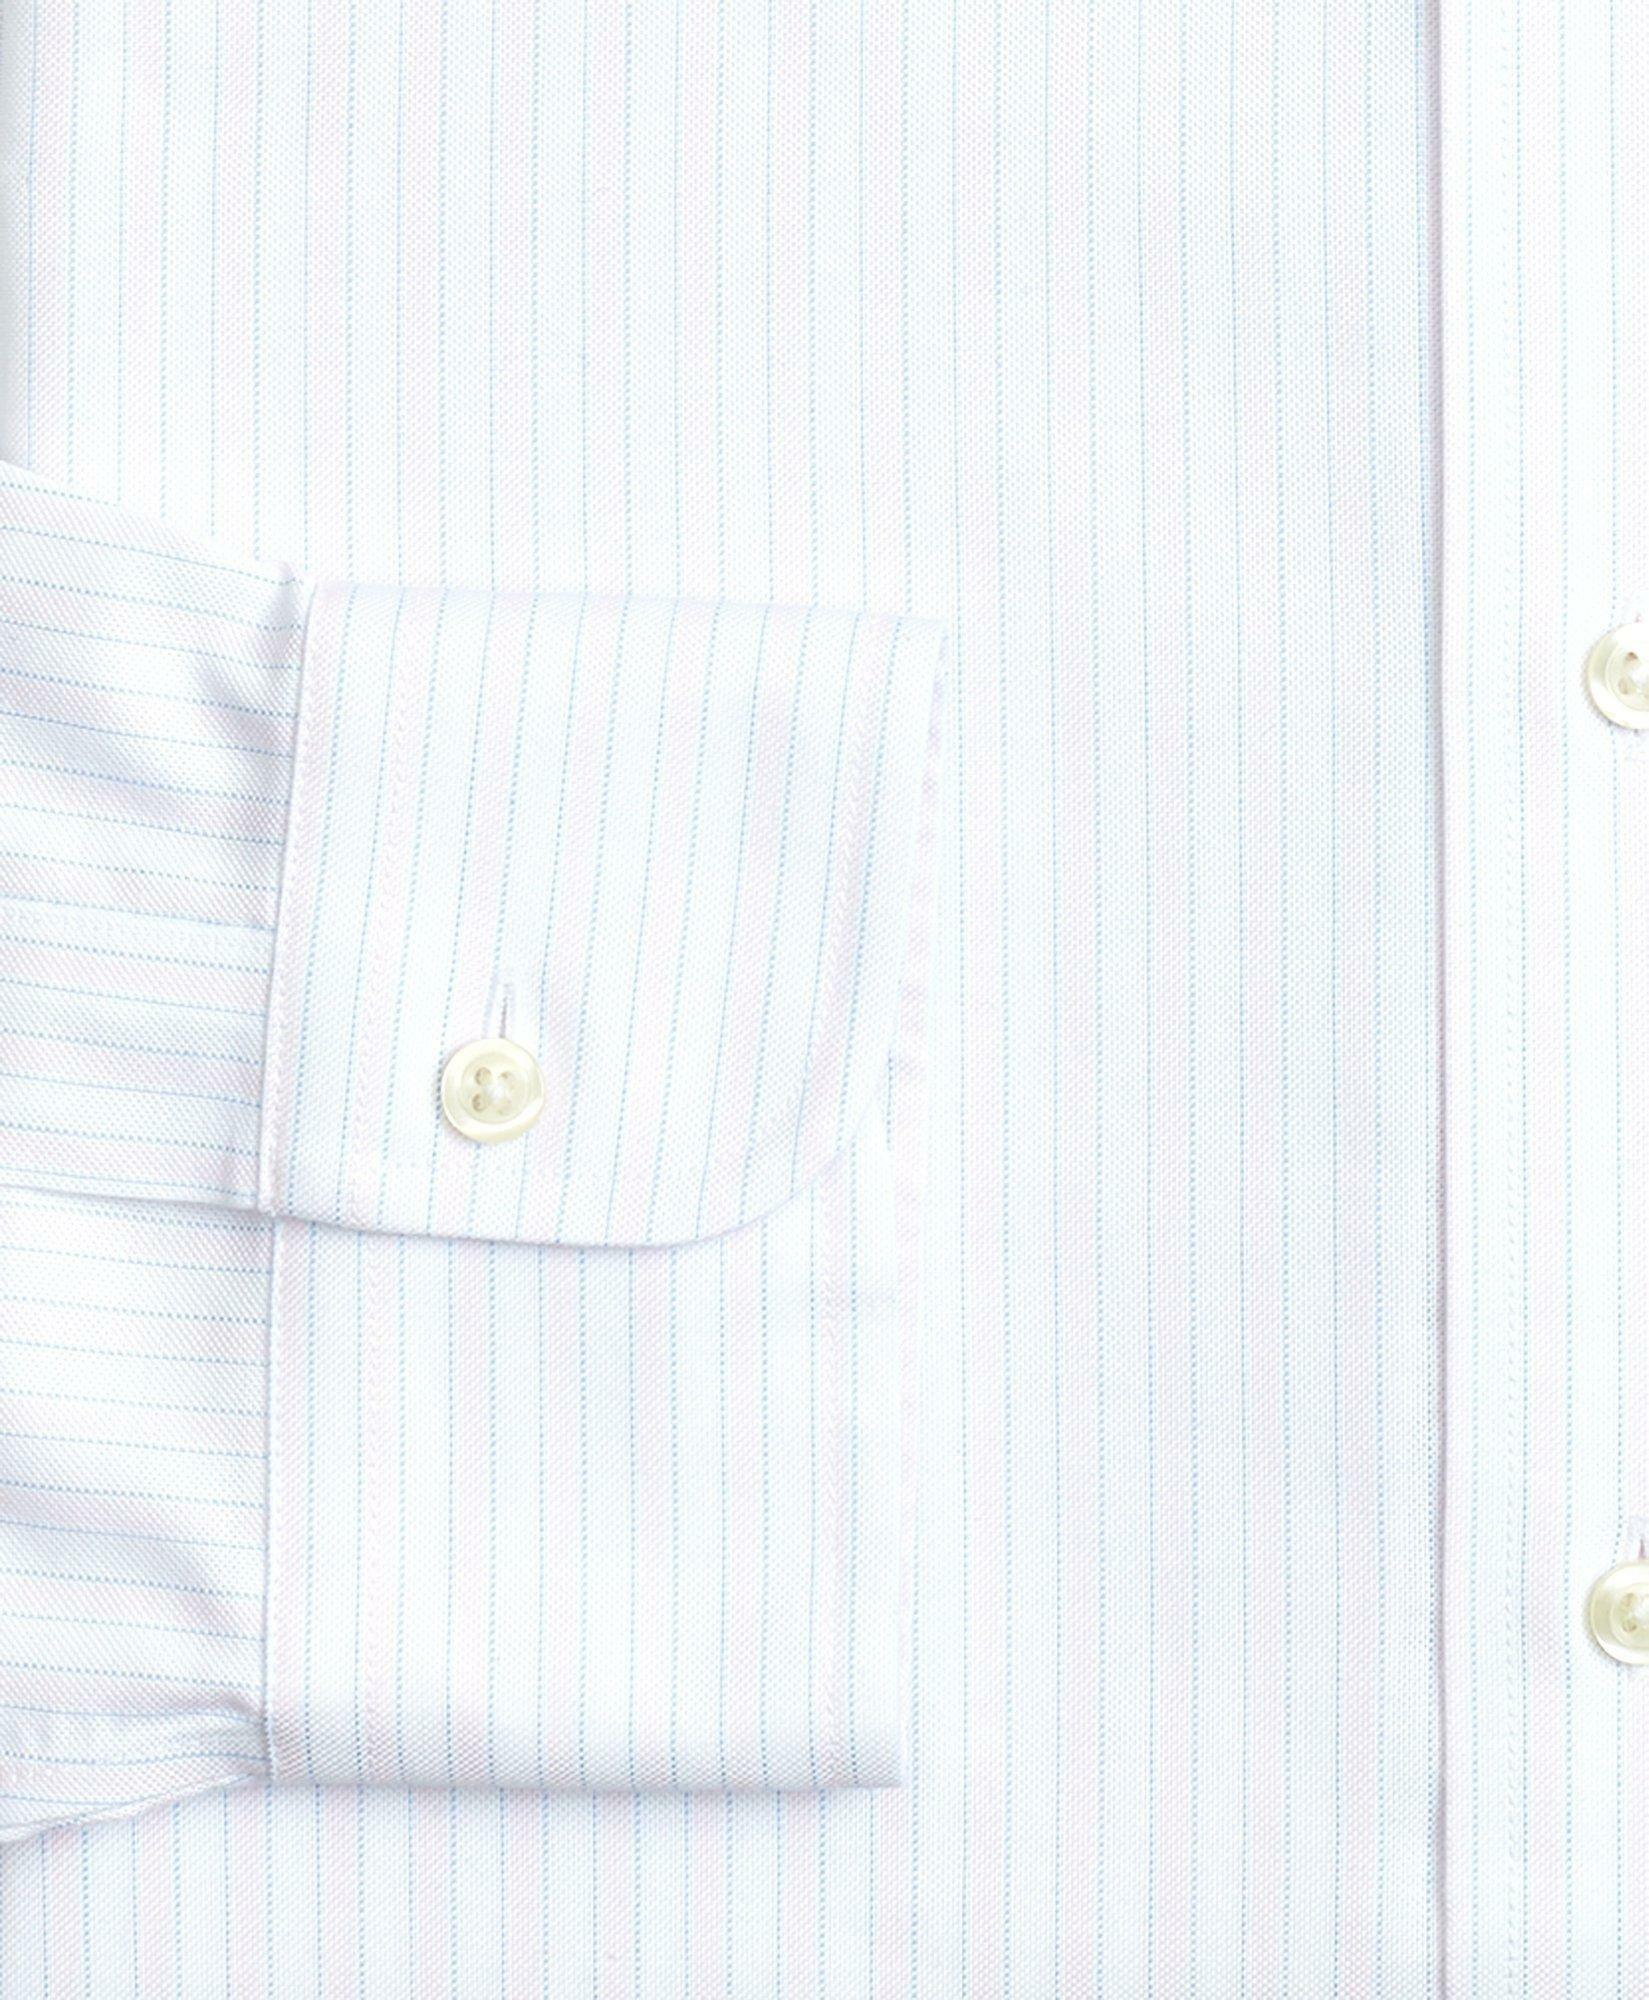 Brooks Brothers Men's Cool Regent Regular-Fit Dress Shirt, Non-Iron Stripe | Pink